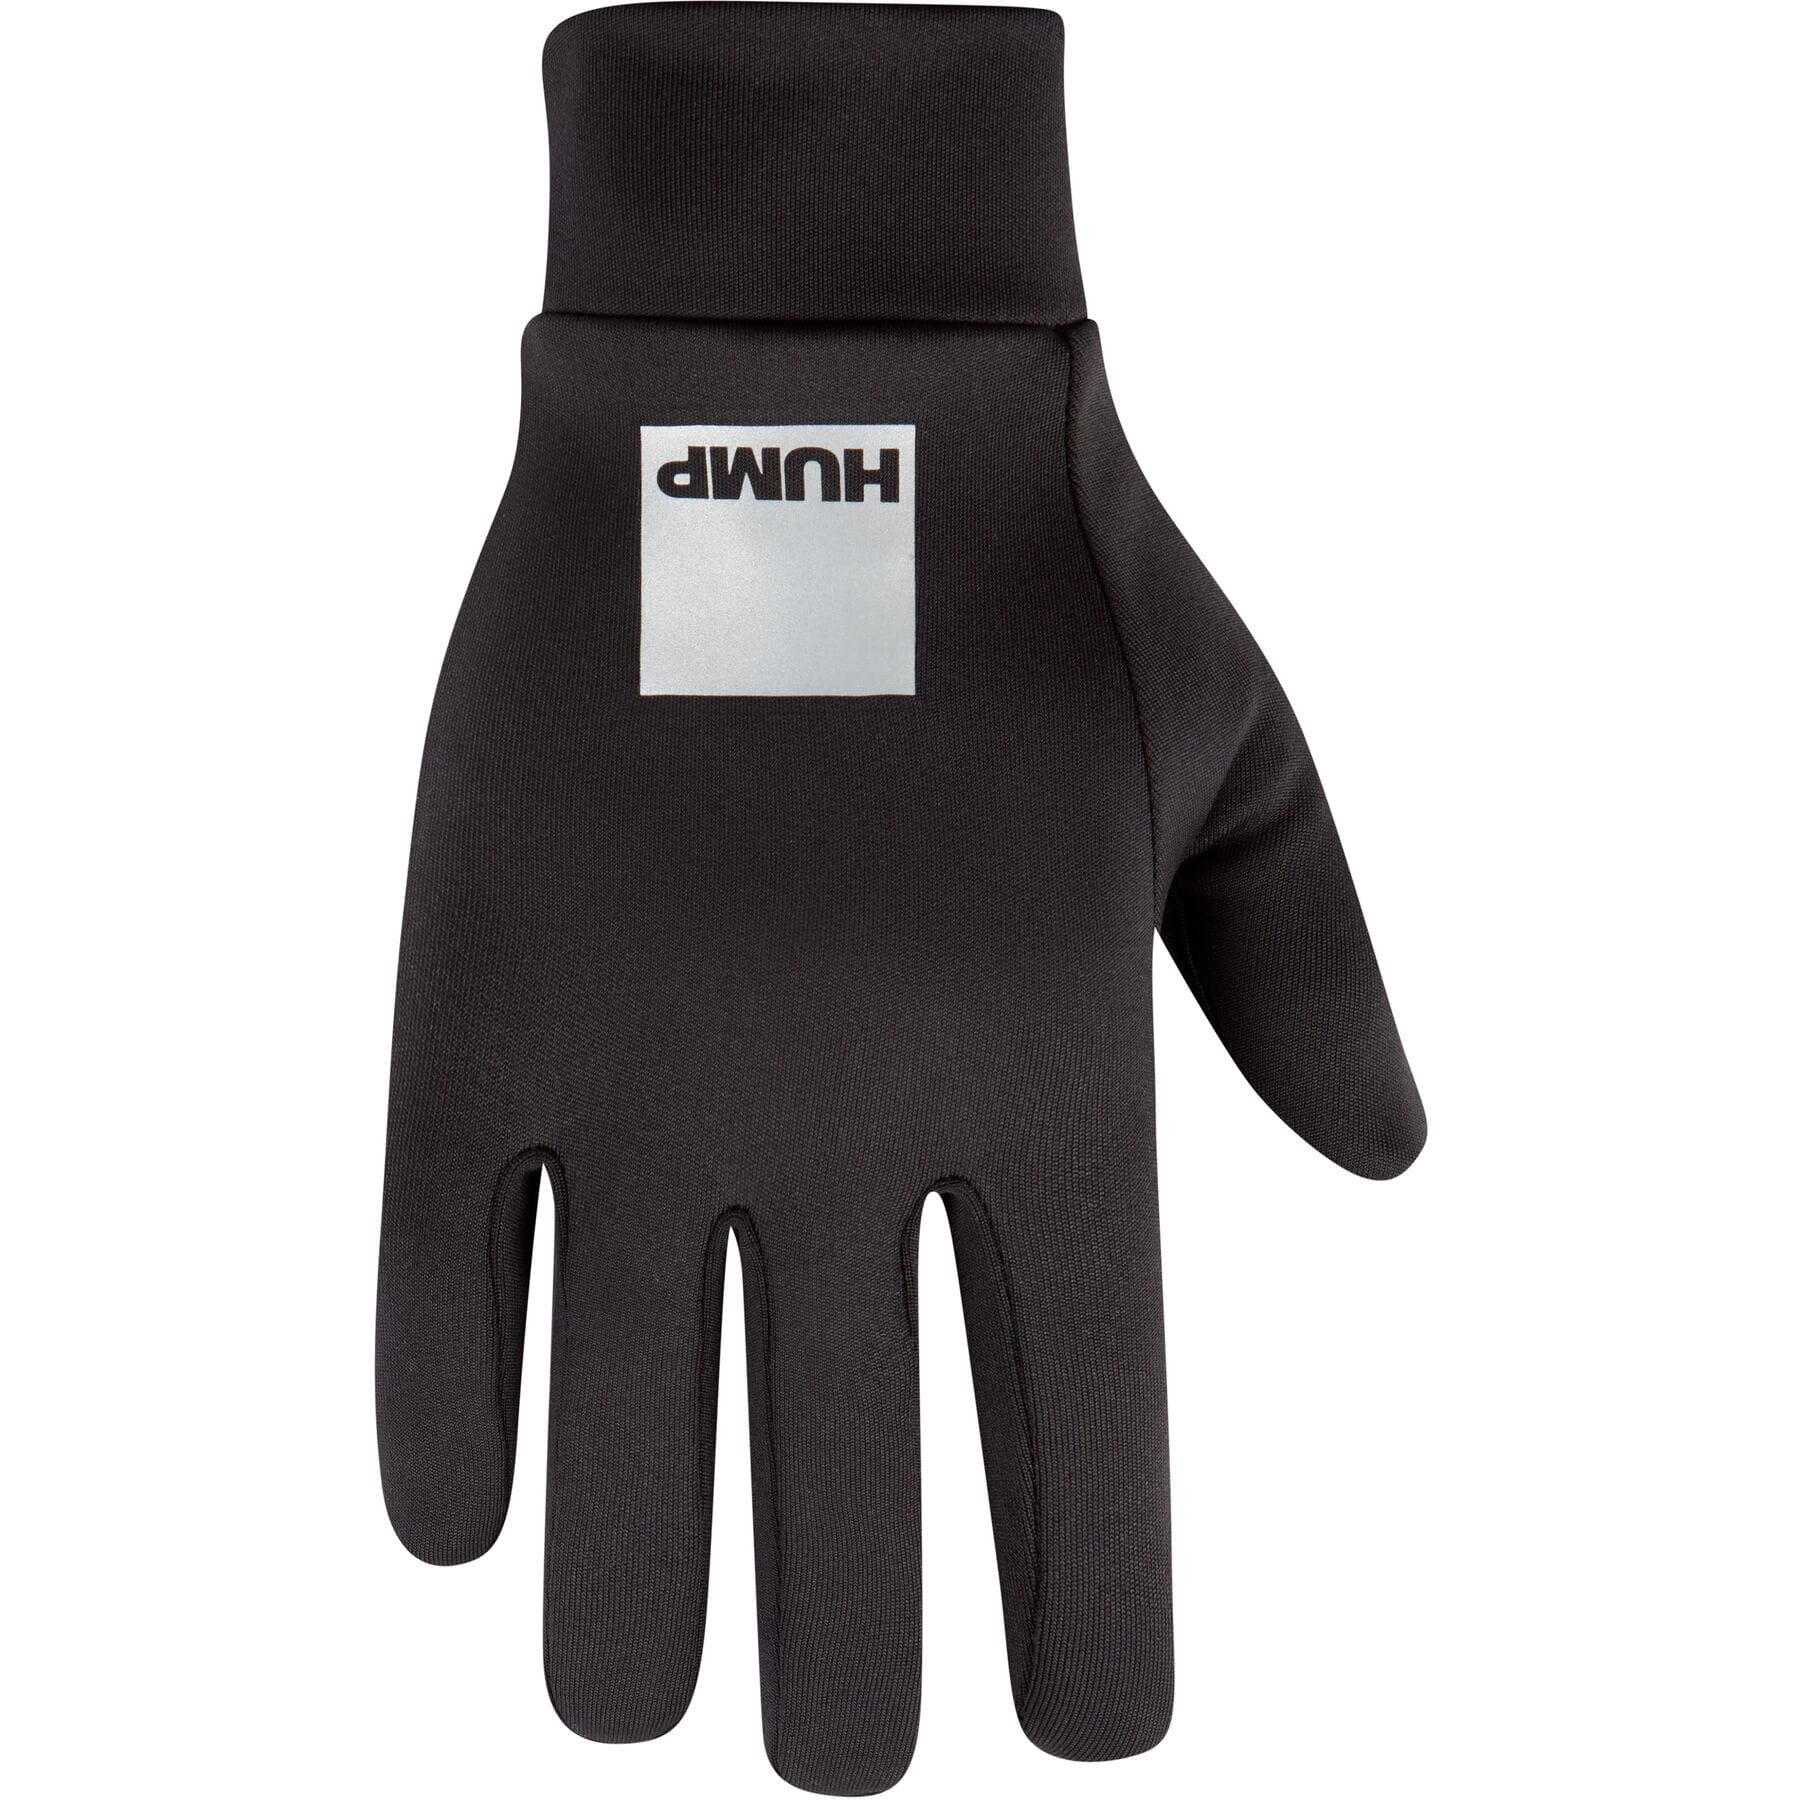 HUMP HUMP Thermal Reflective Glove - Black - X-Large